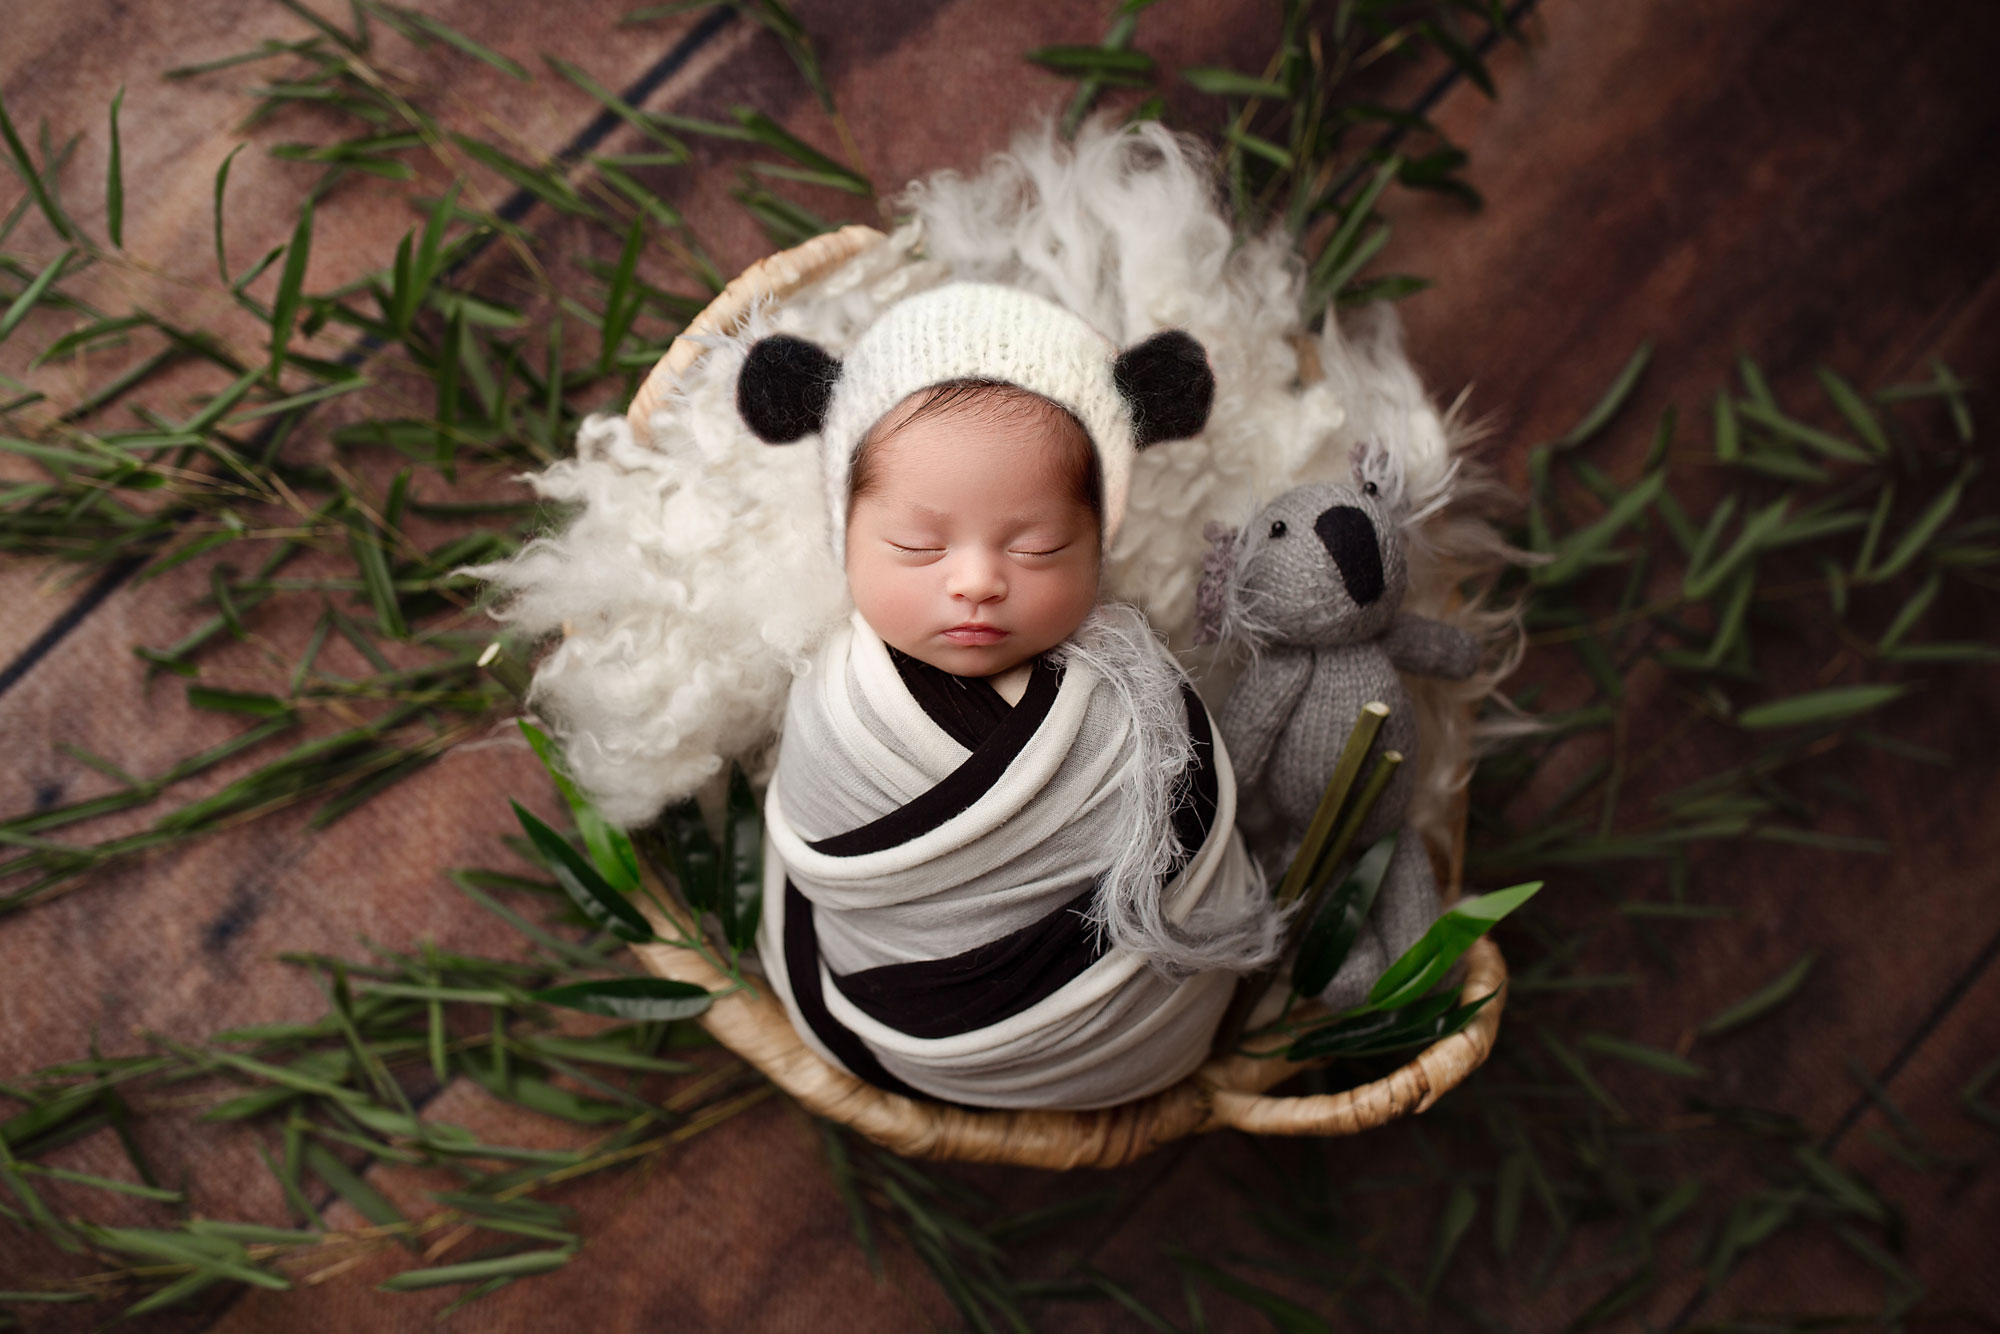 newborn baby dressed as a panda bear, bamboo leaves around the baby